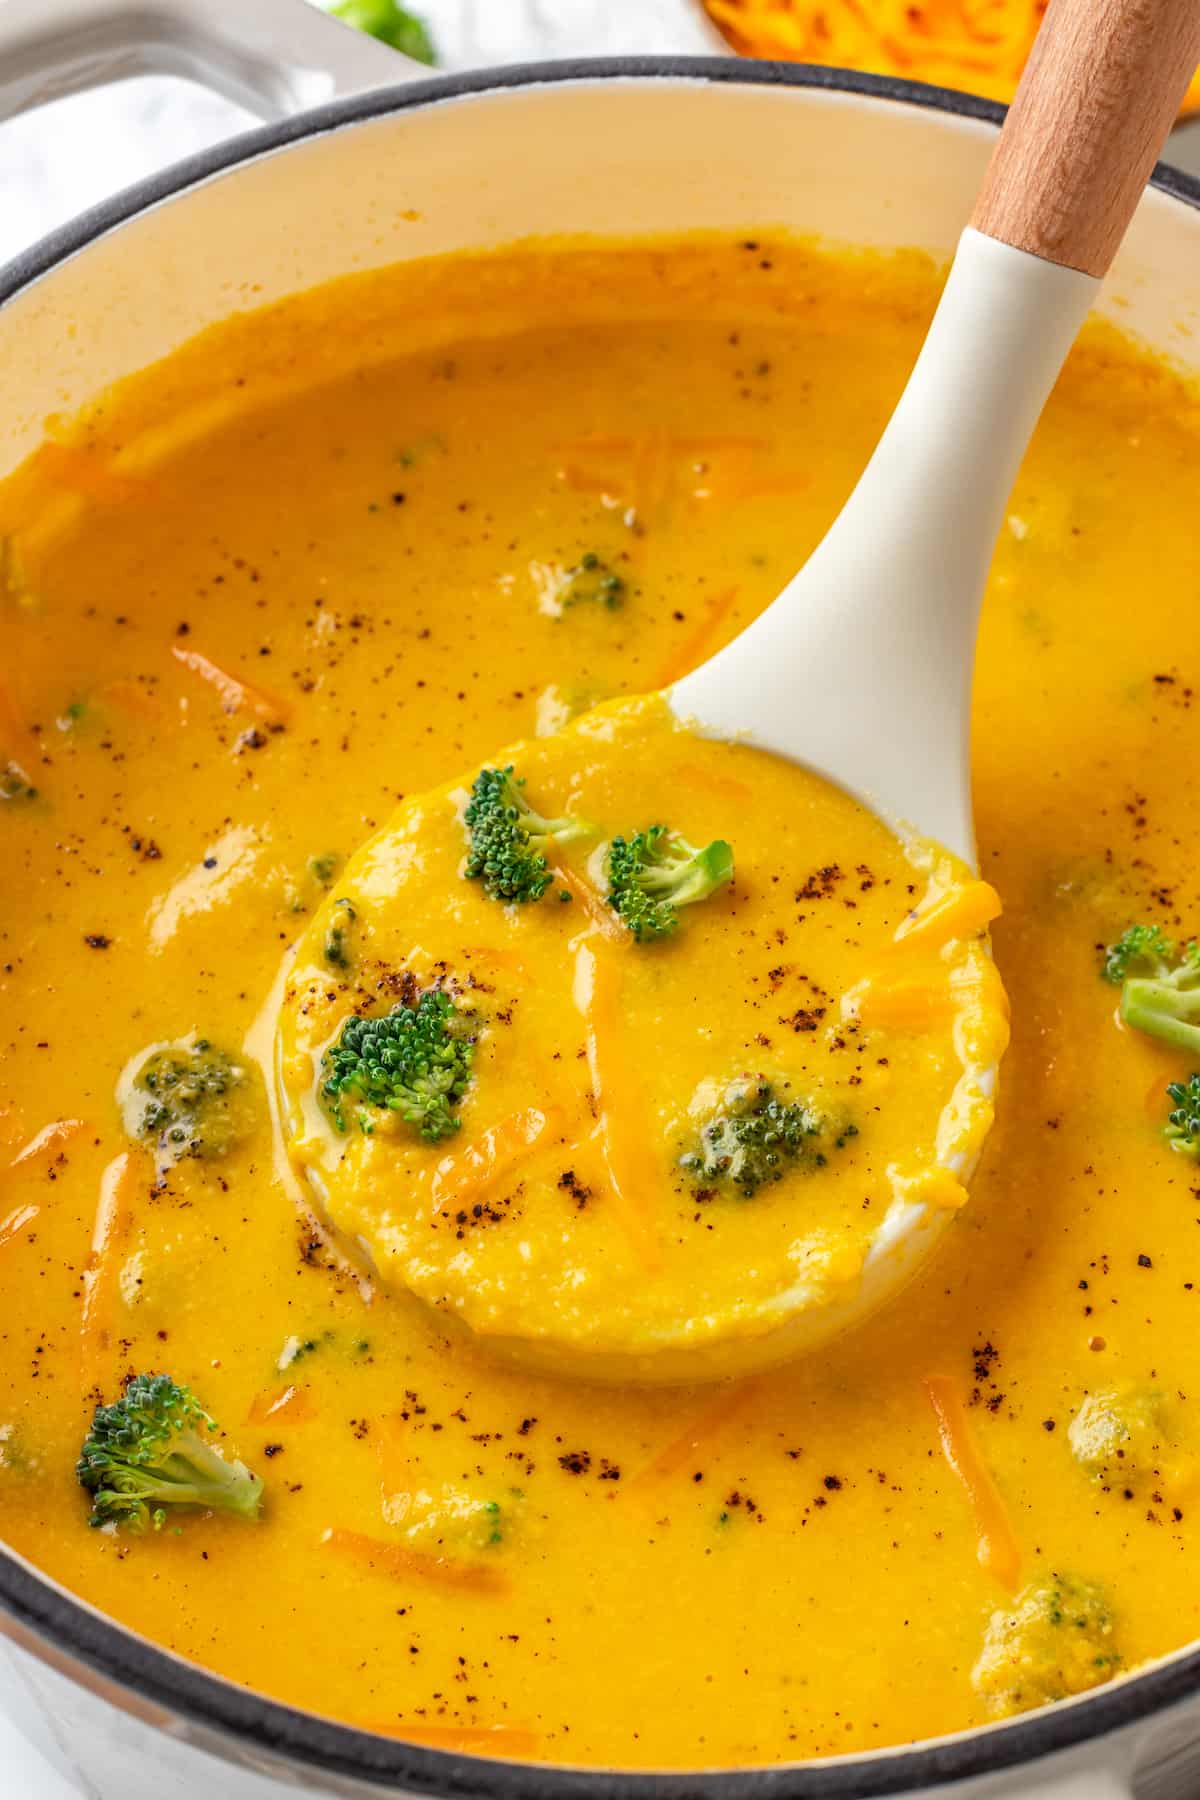 Ladle full of vegan broccoli cheddar soup